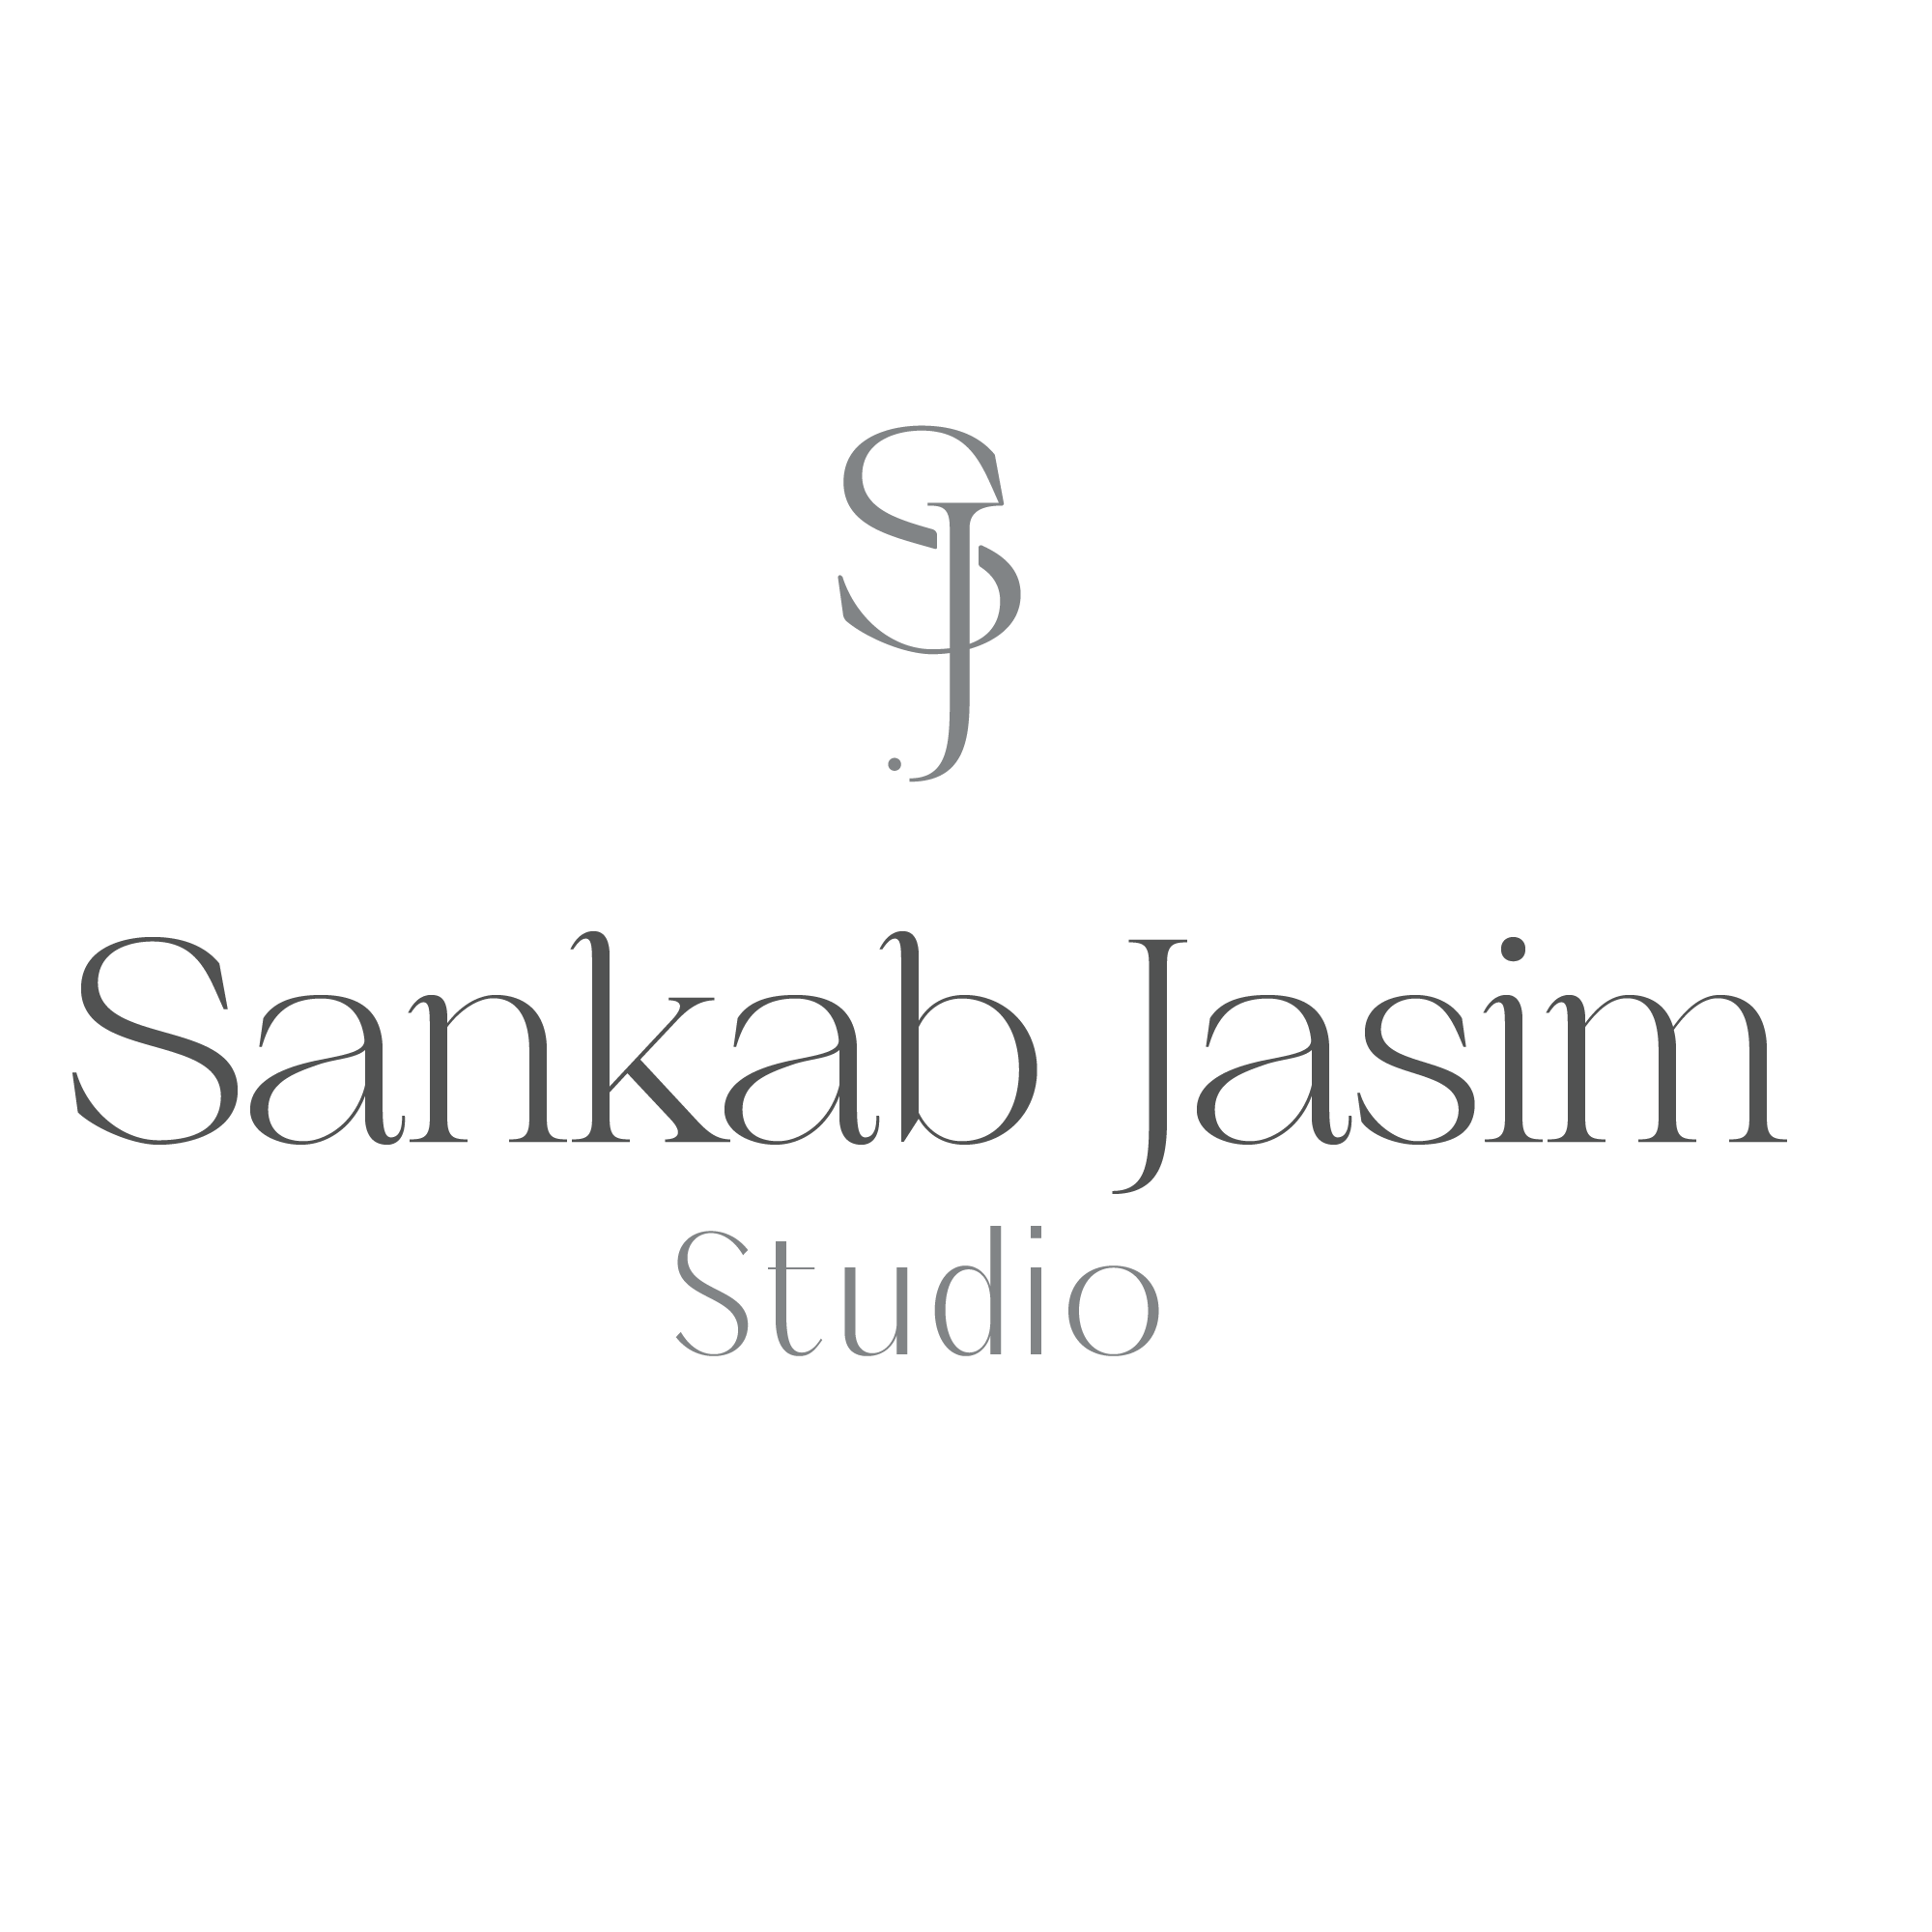 Sankab Jasim Studio | Fiber Art | Mixed Media